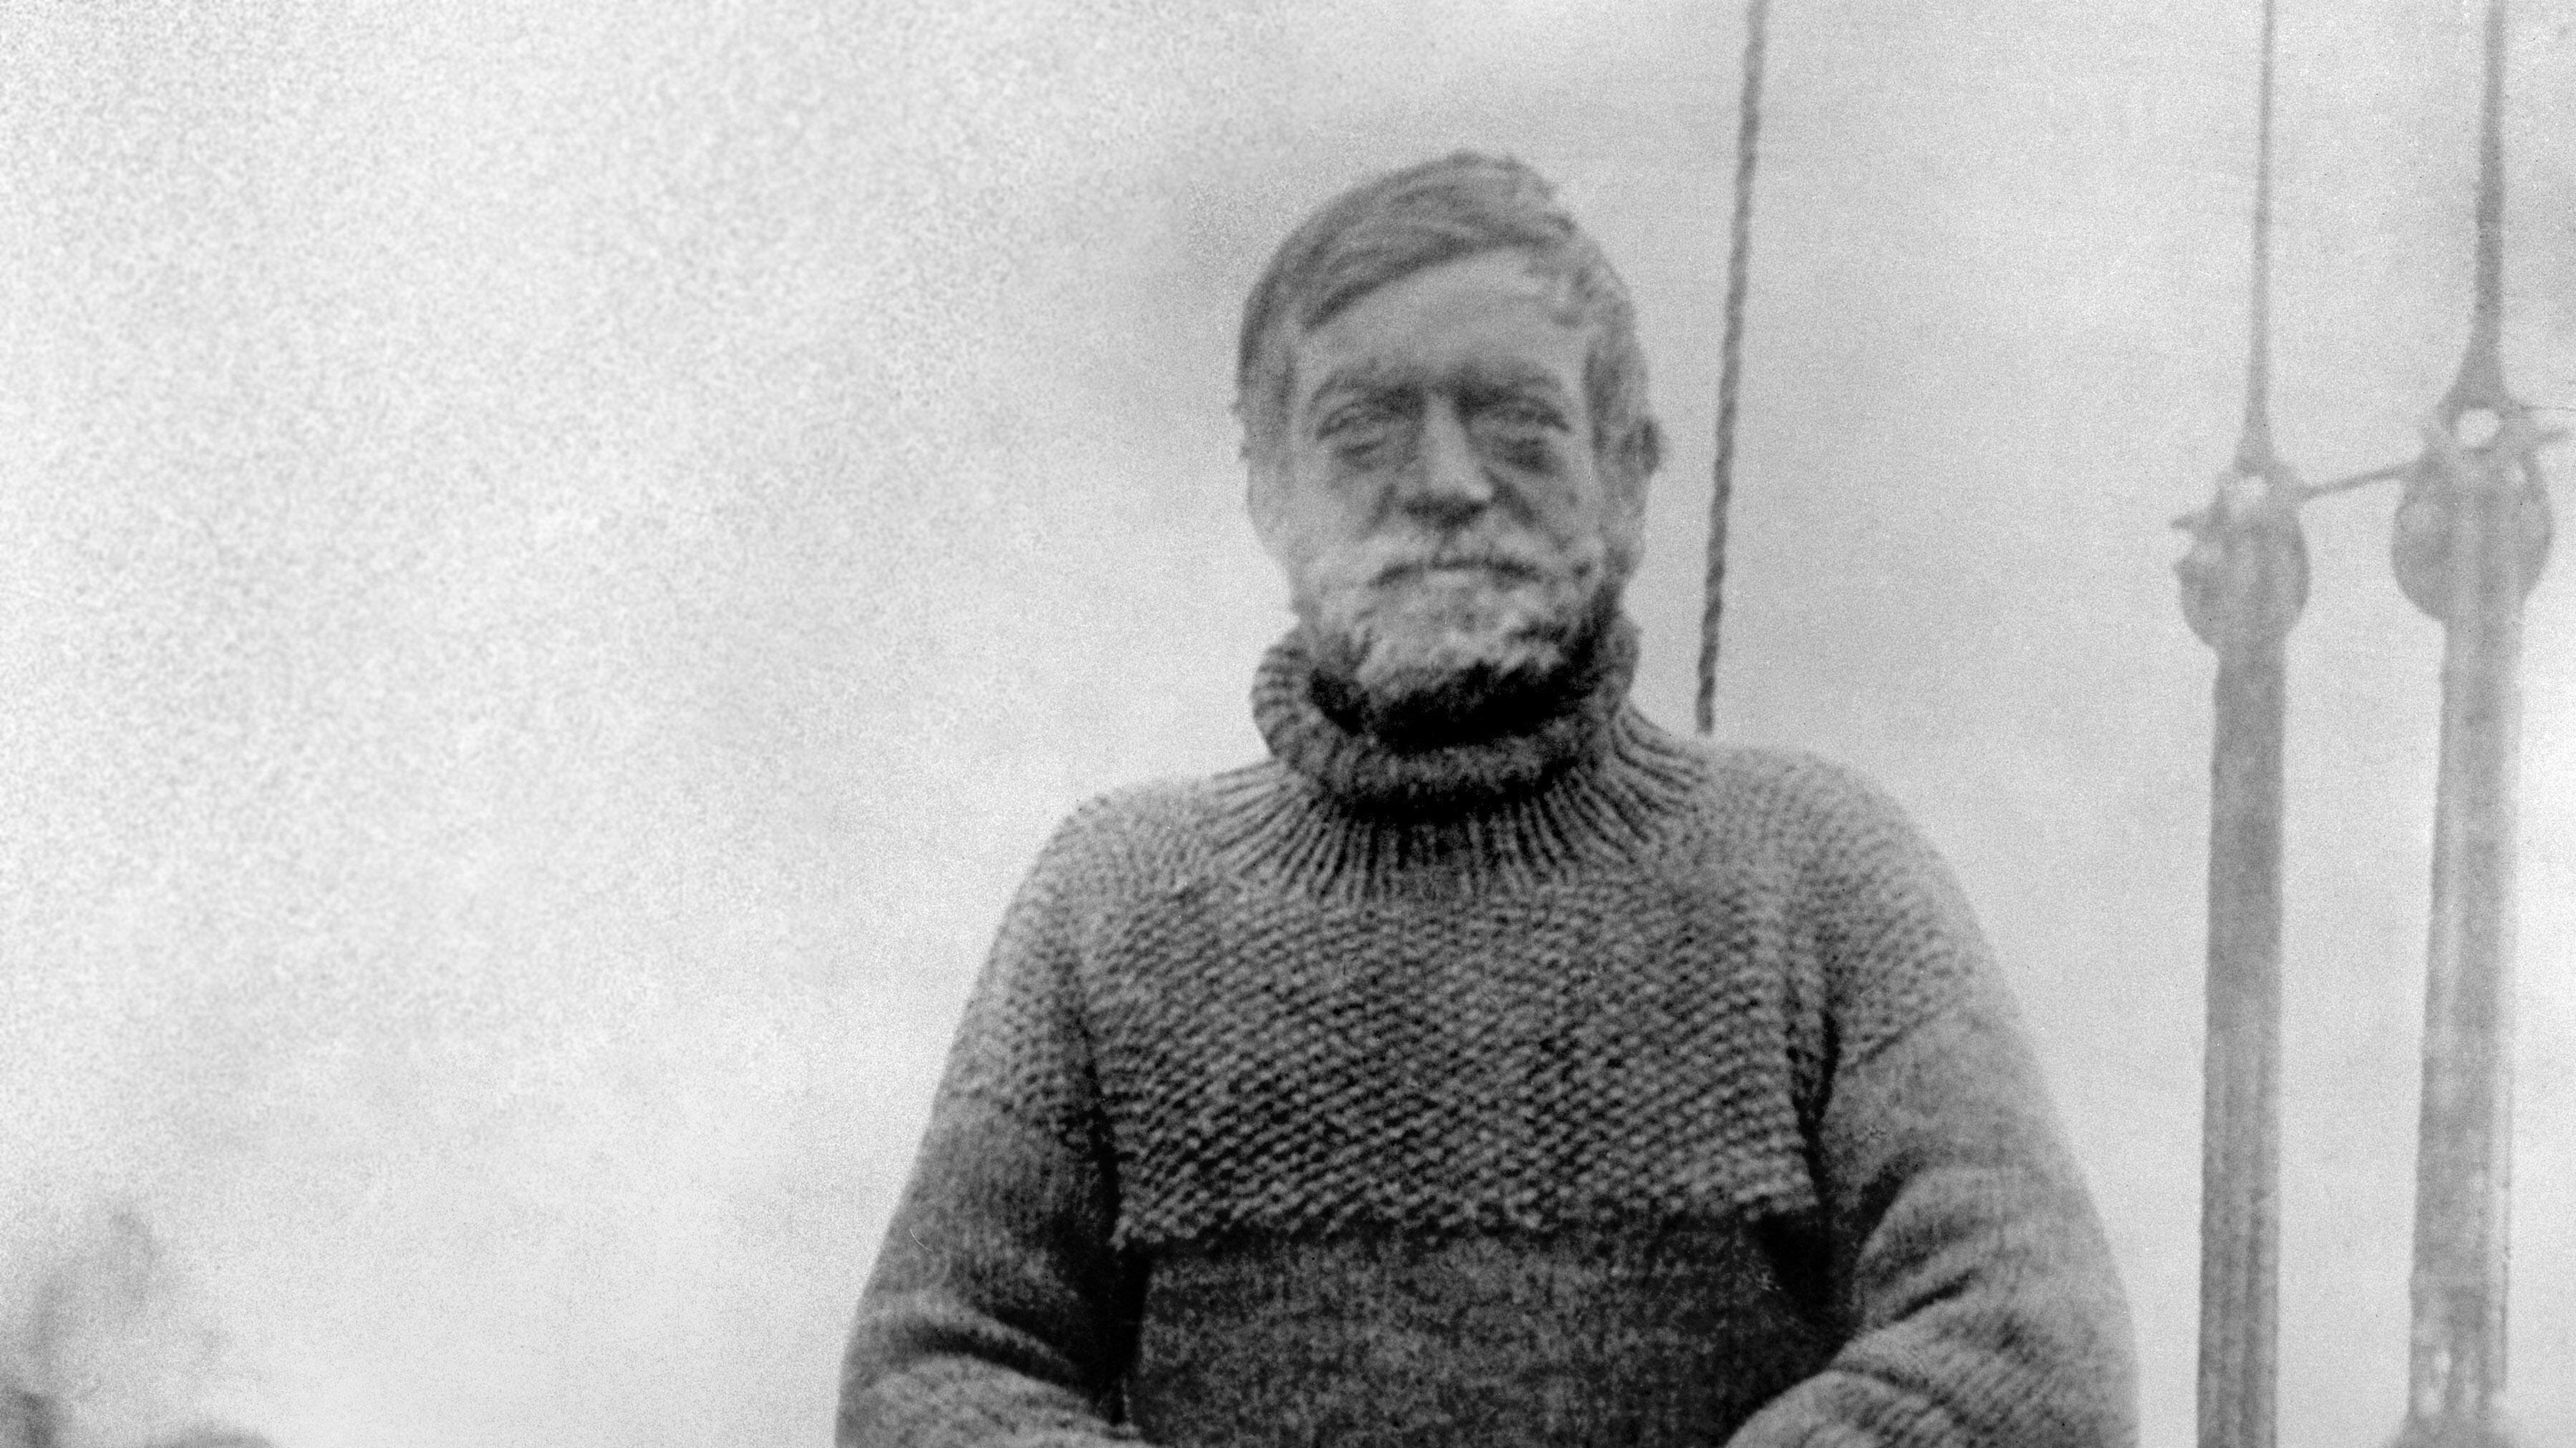 Sir Ernest Shackleton died on board Quest